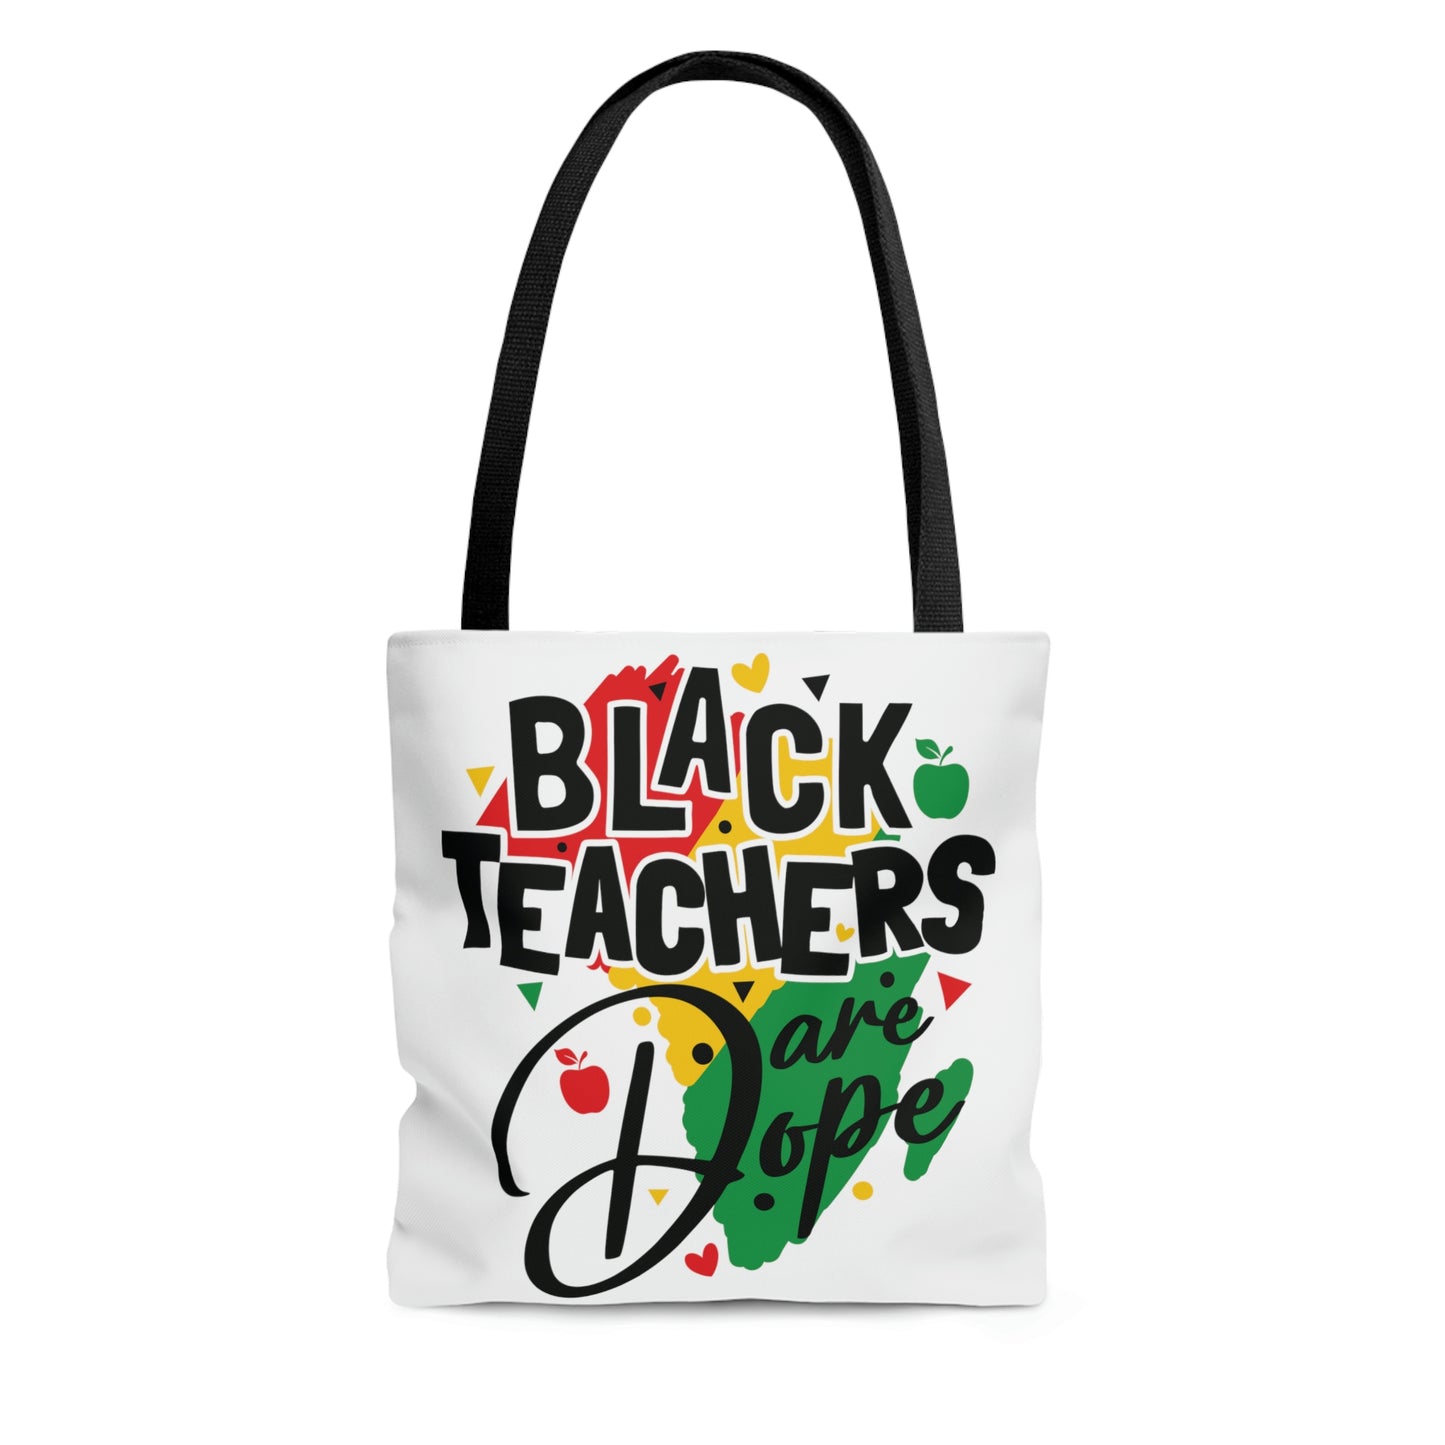 Black educators are dope Tote Bag